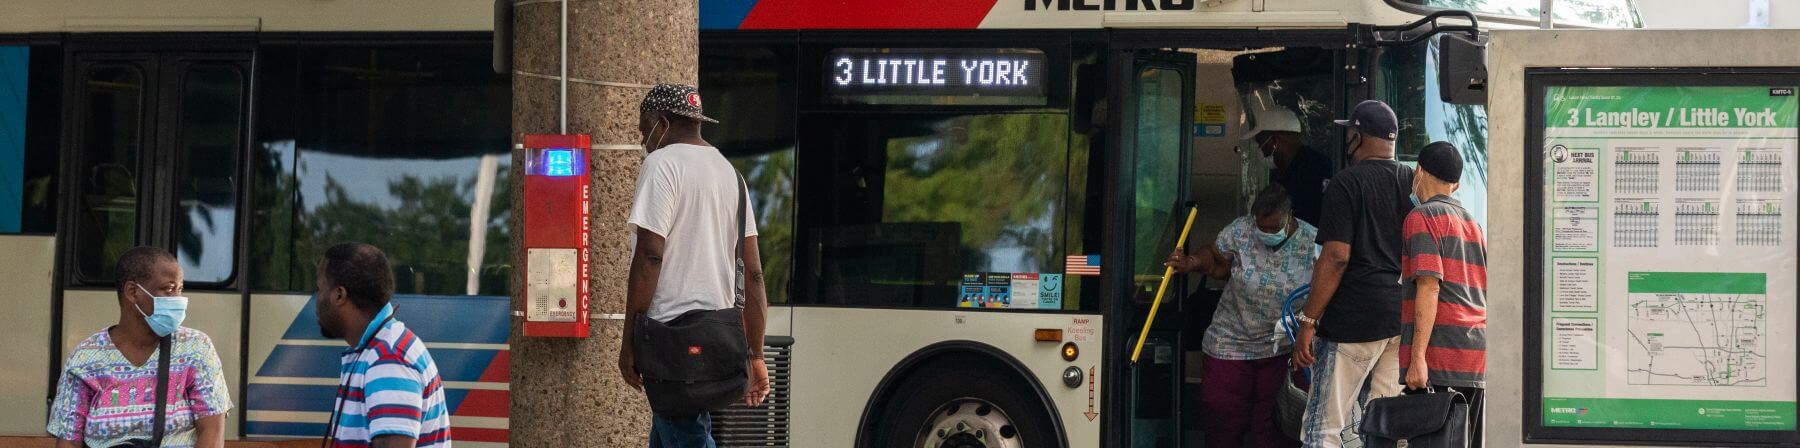 3 Langley - Little York bus